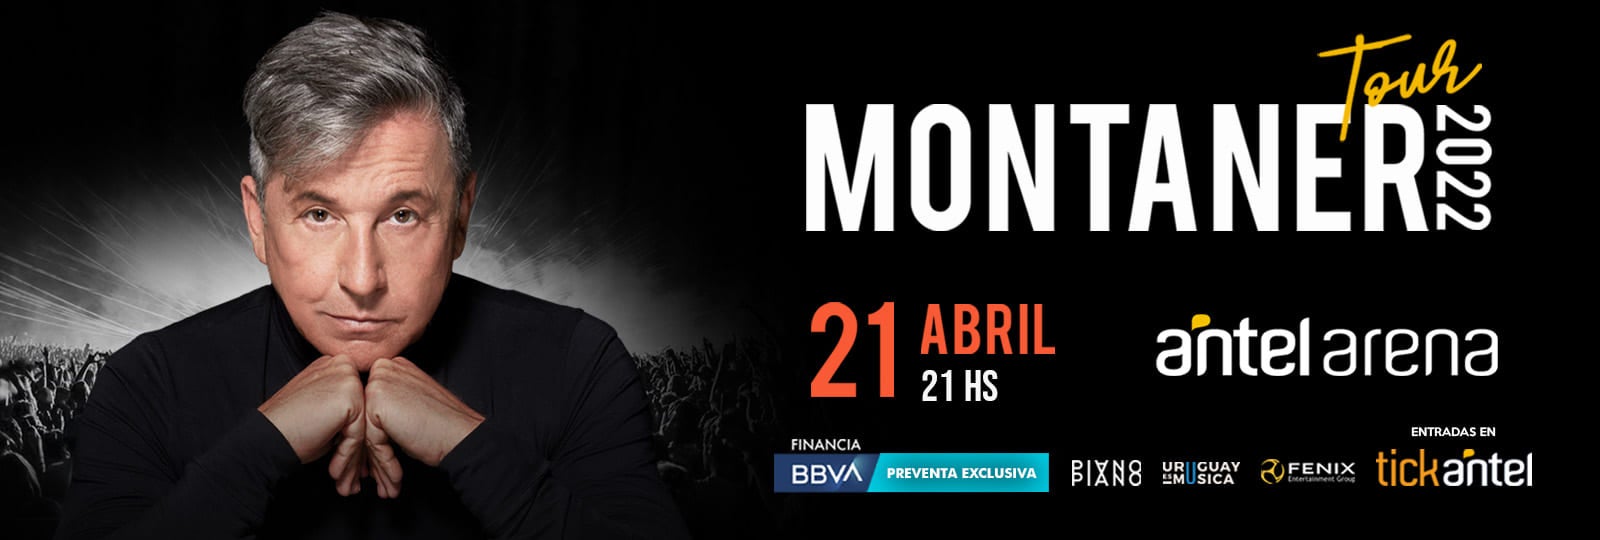 Montaner Antel Arena